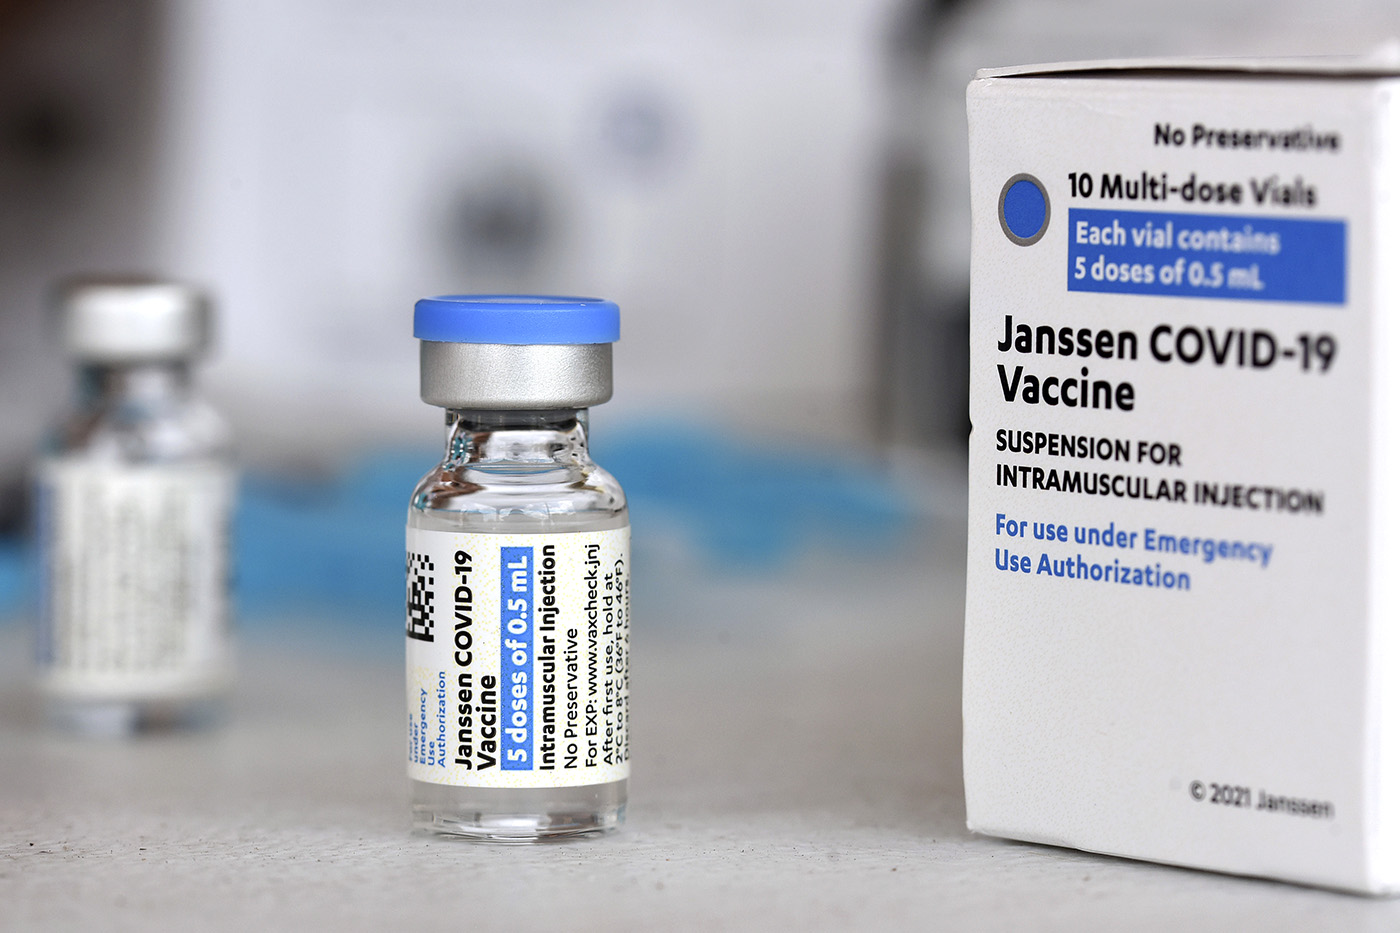 johnson and johnson vaccine production capacity